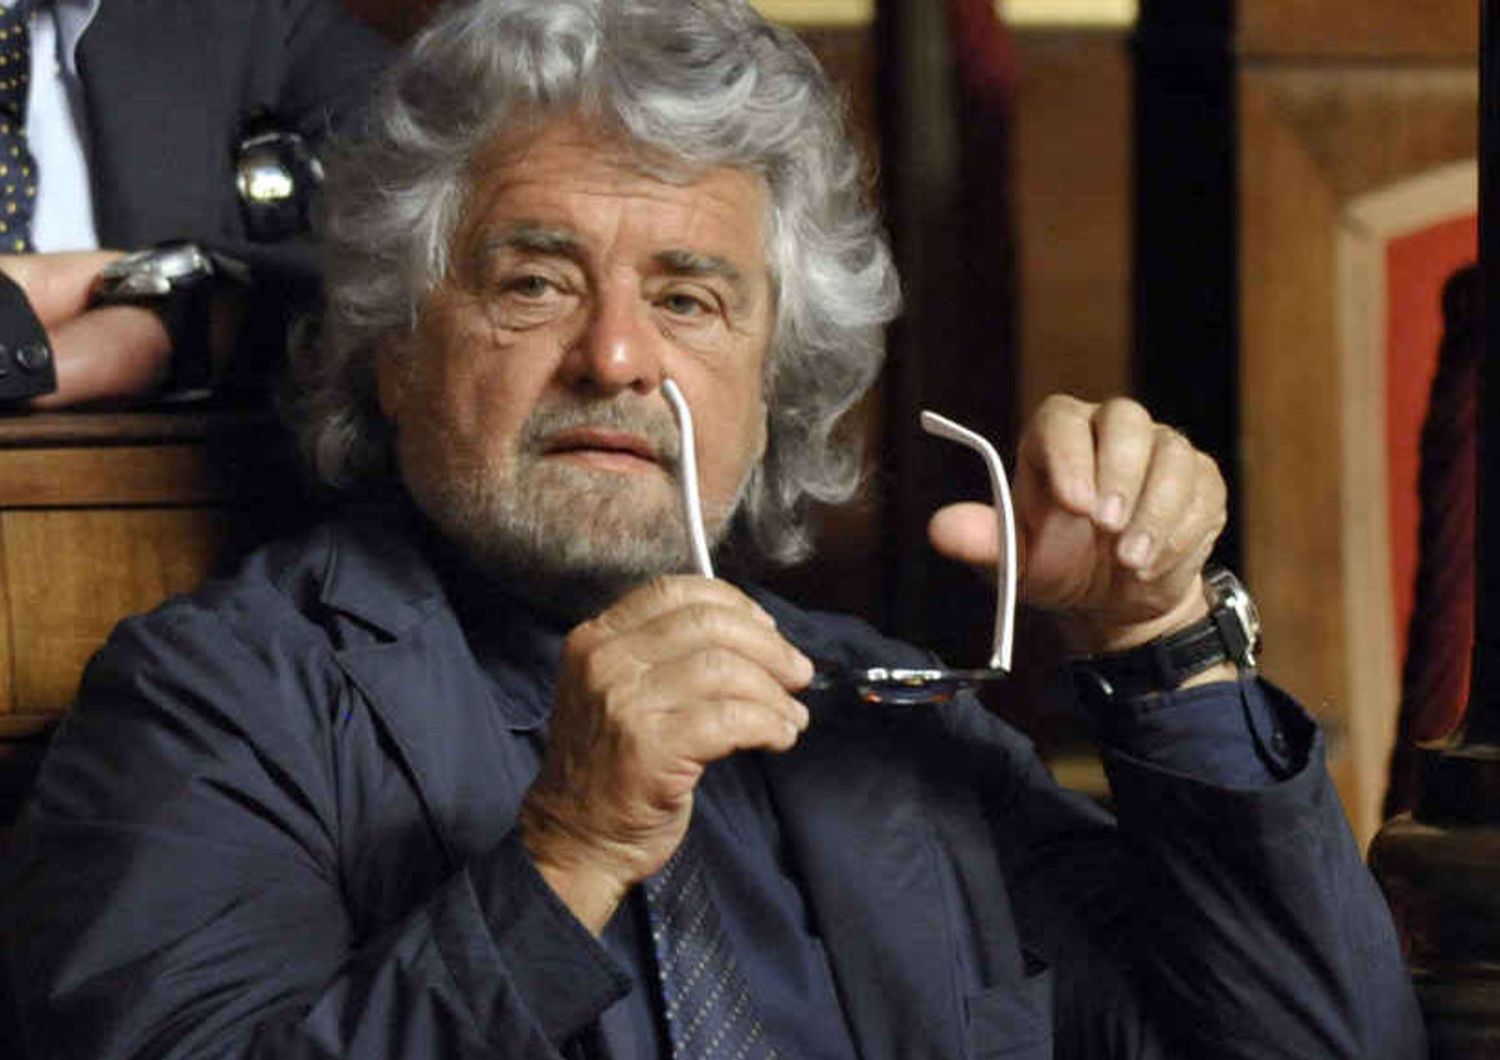 Lavoro: Grillo contro 'CoeRenzie', "difendeva art.18"